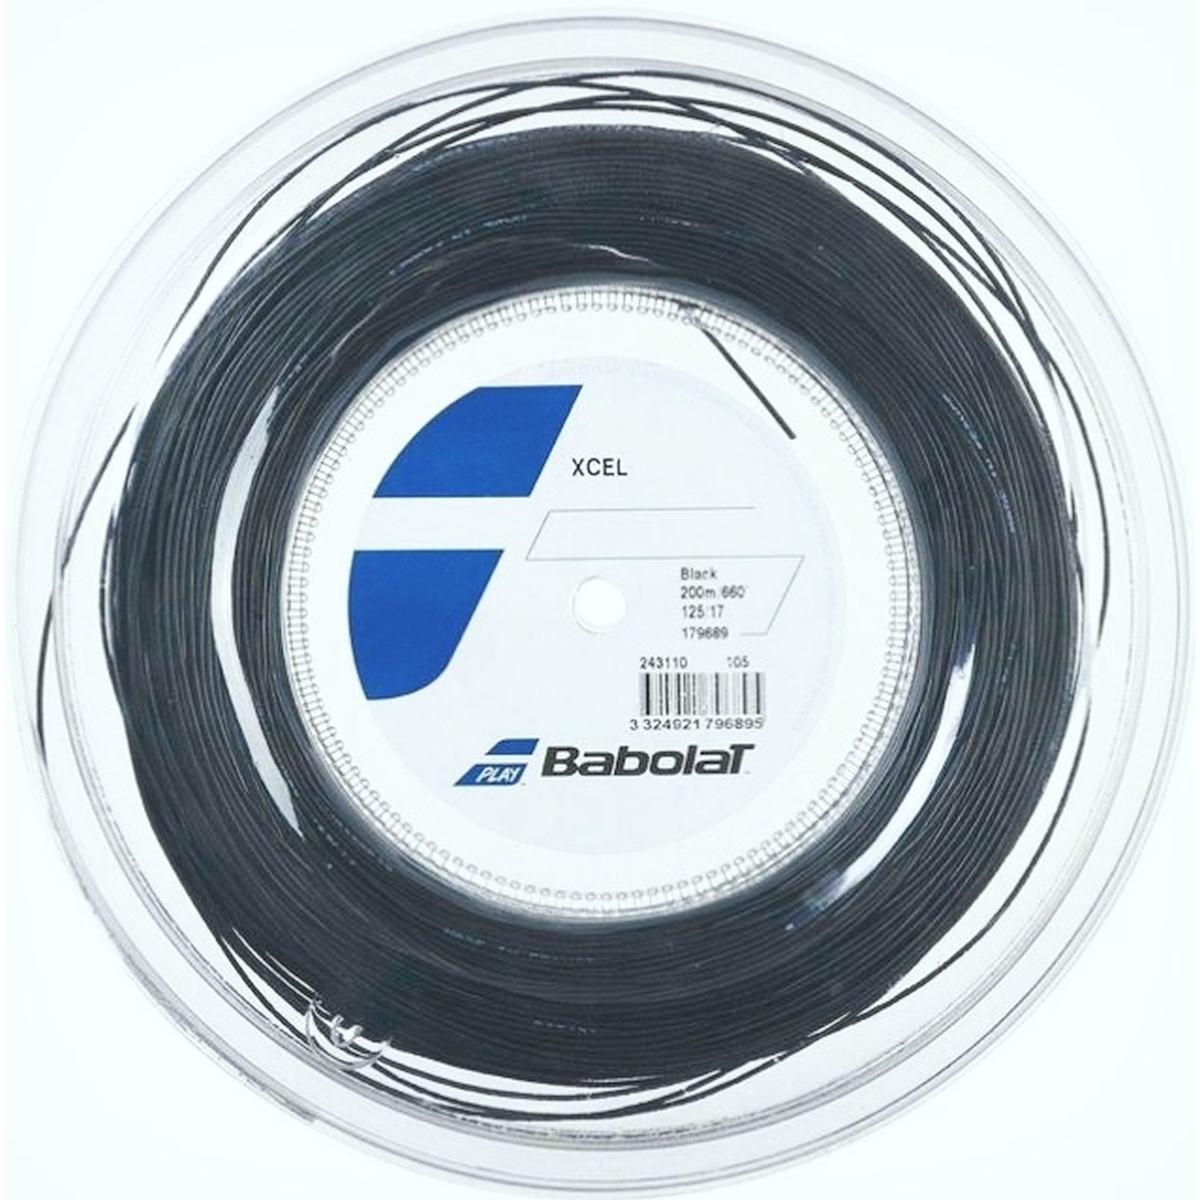 Babolat Xcel 17g Black Tennis String (Reel)